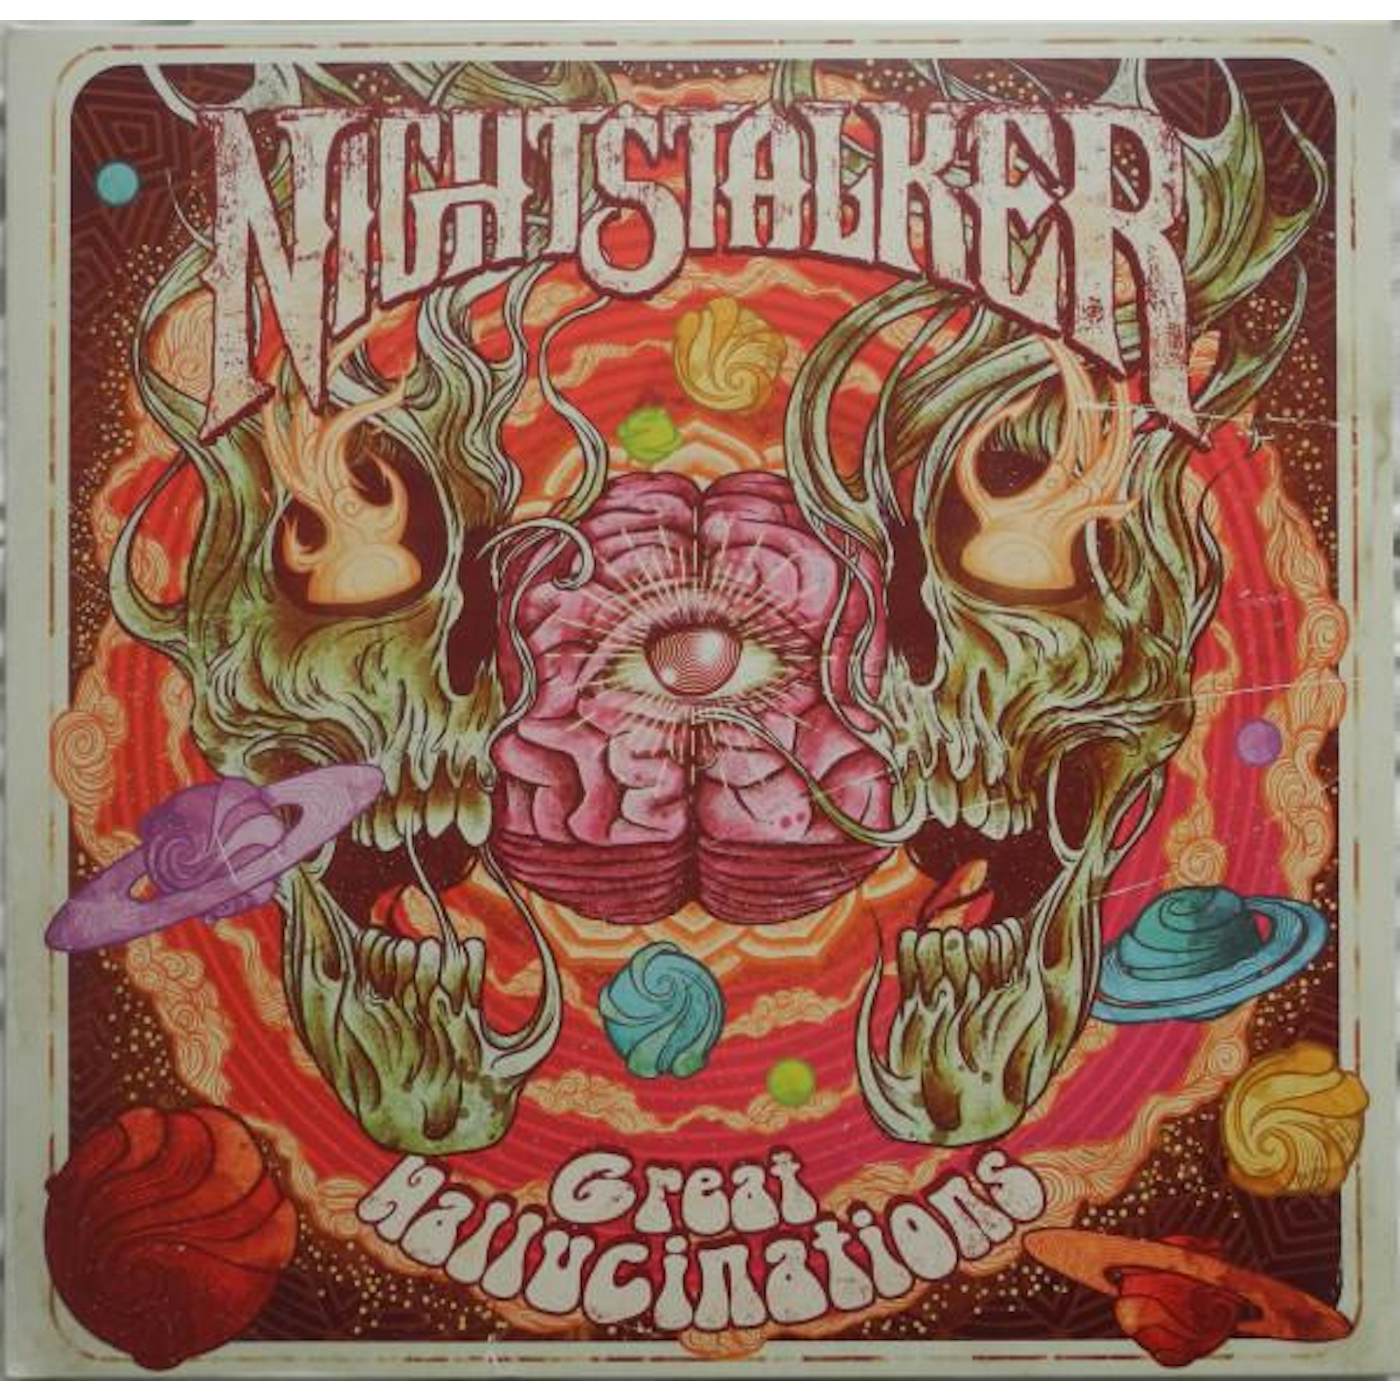 Nightstalker Great Hallucinations Vinyl Record